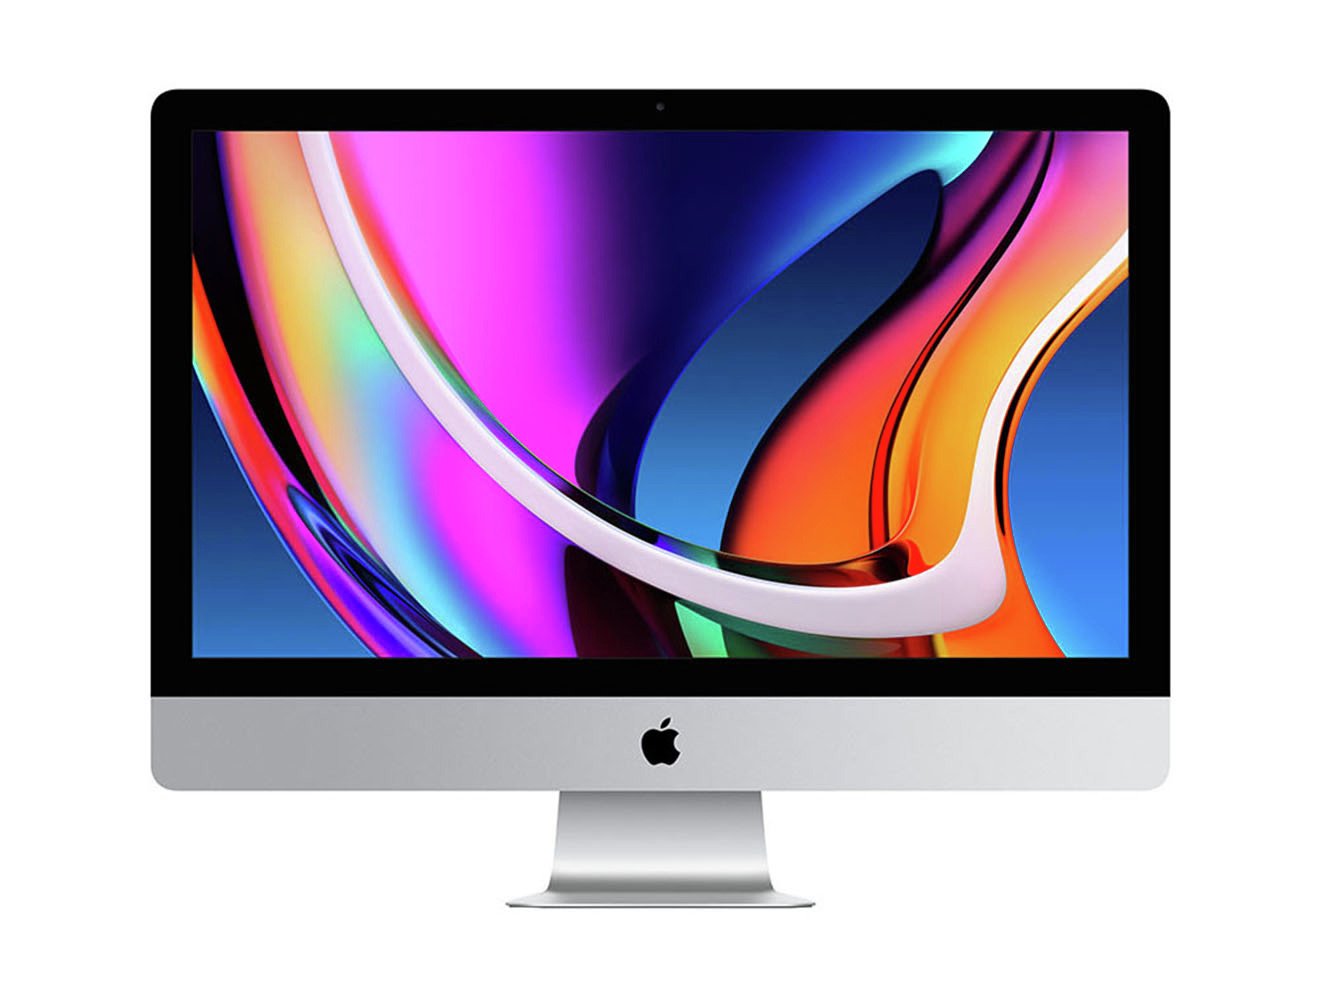 Apple iMac 2020 27in Retina 5k Display i7 8GB 512GB Desktop Review